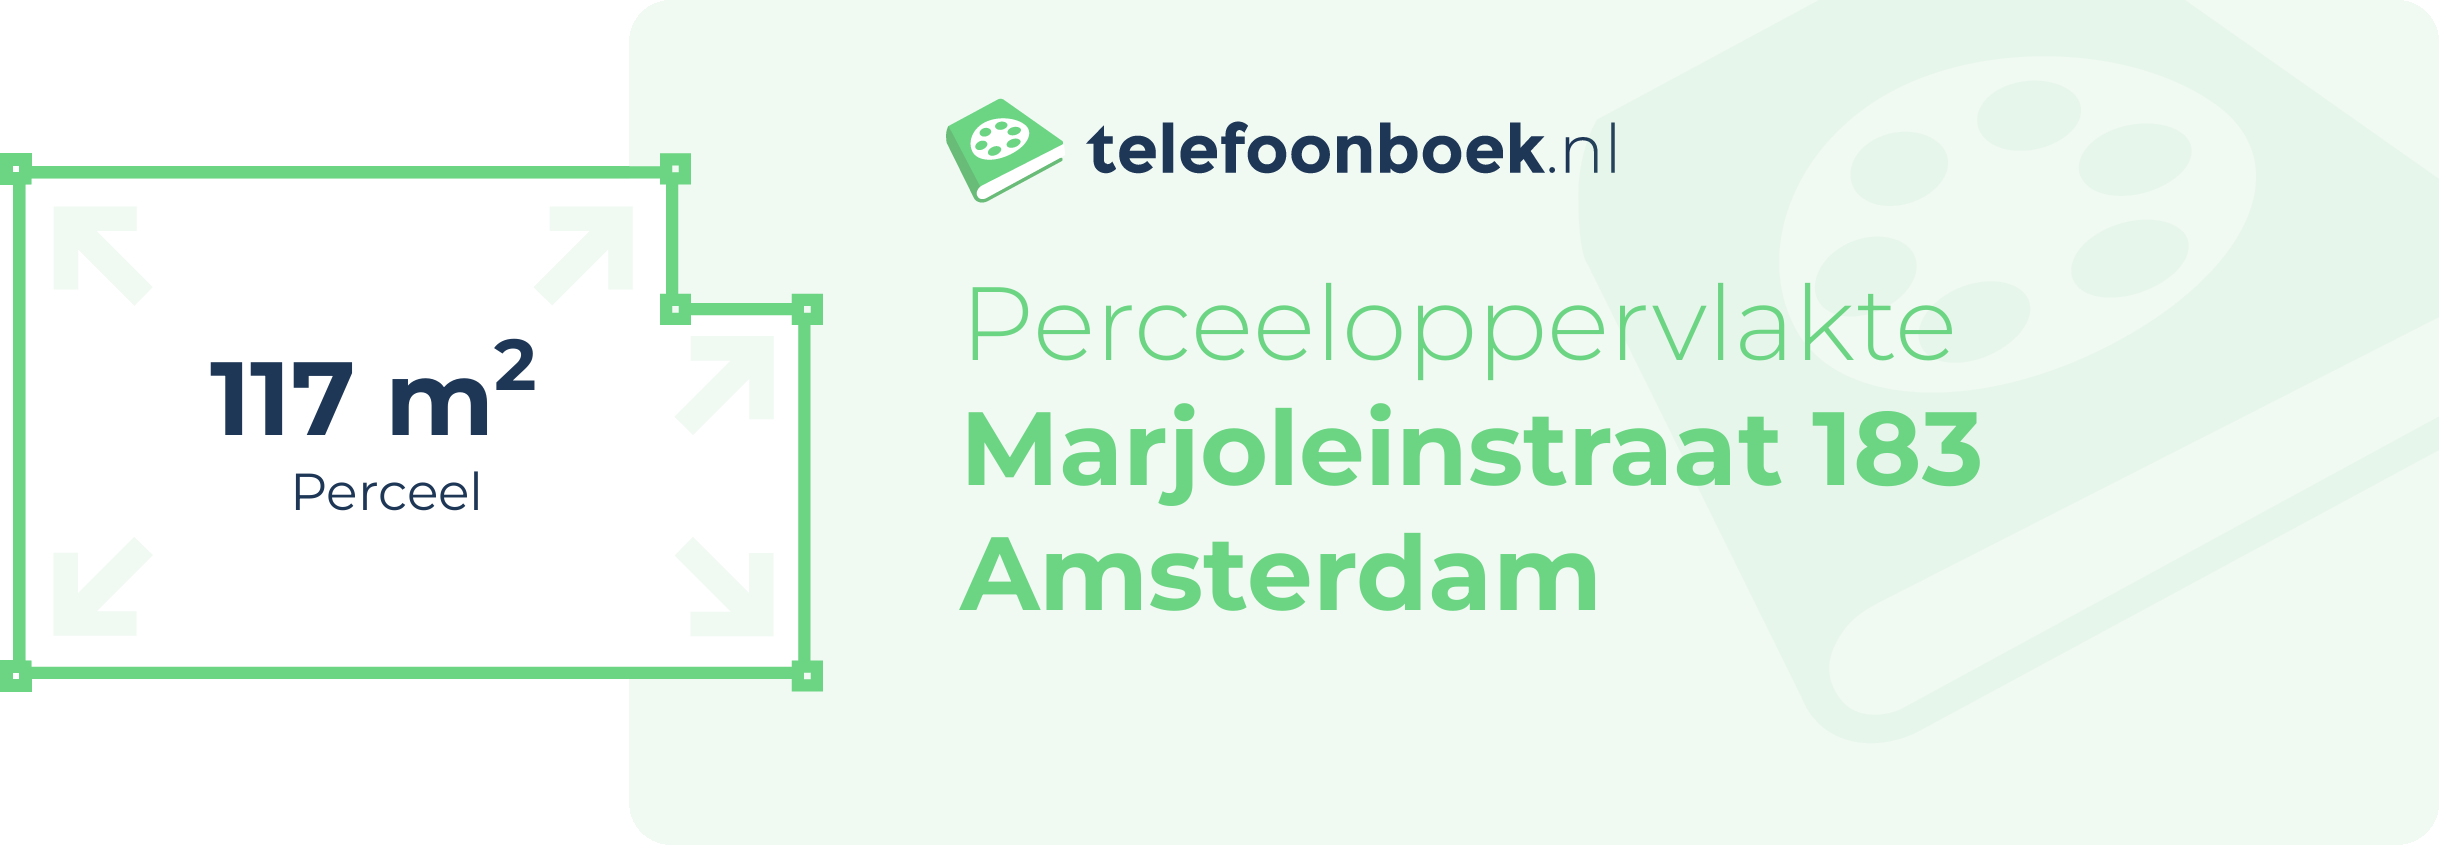 Perceeloppervlakte Marjoleinstraat 183 Amsterdam